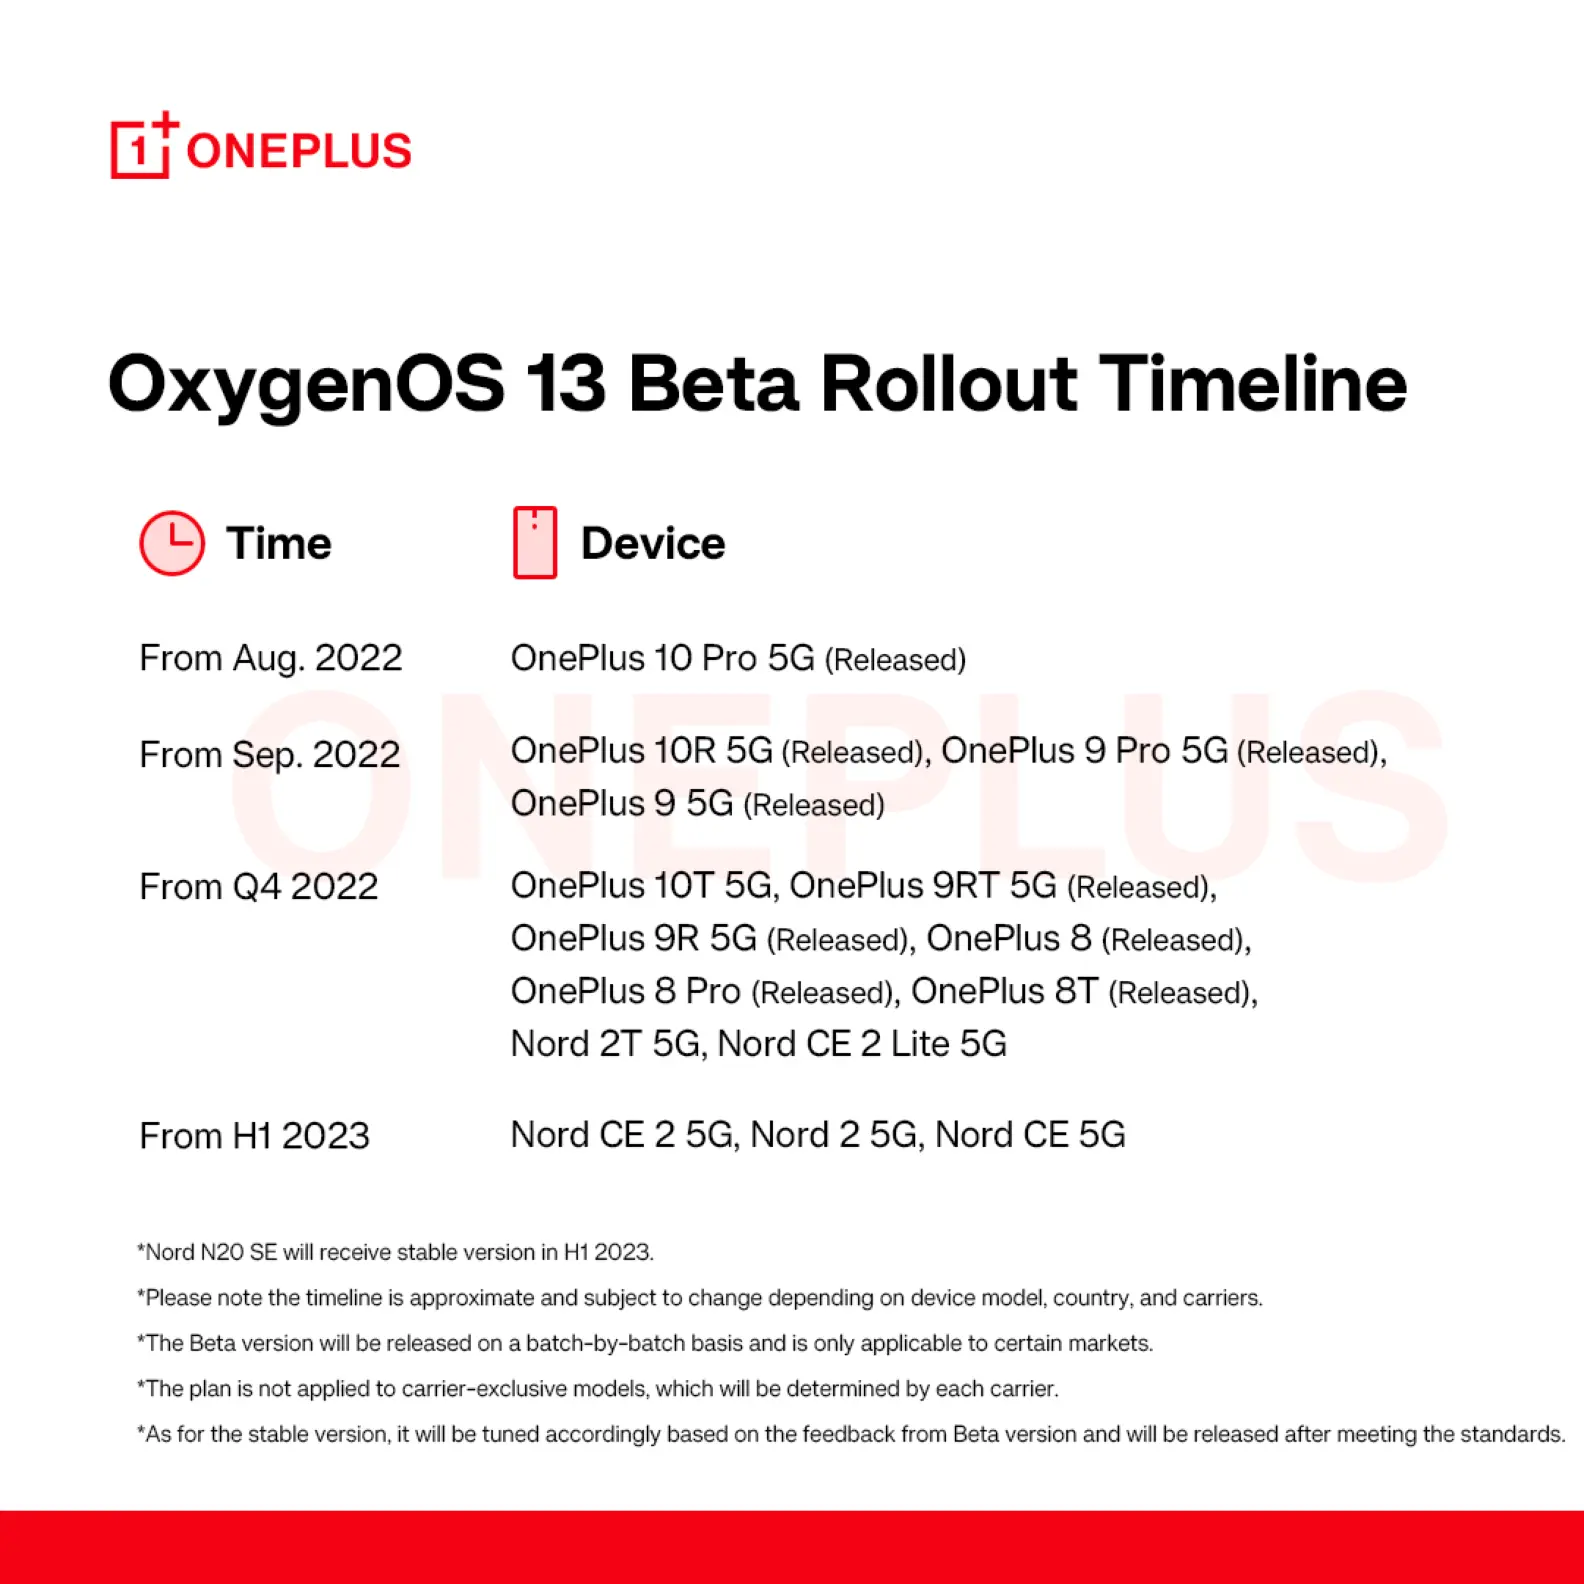 oneplus oxygenos 13 beta timeline 